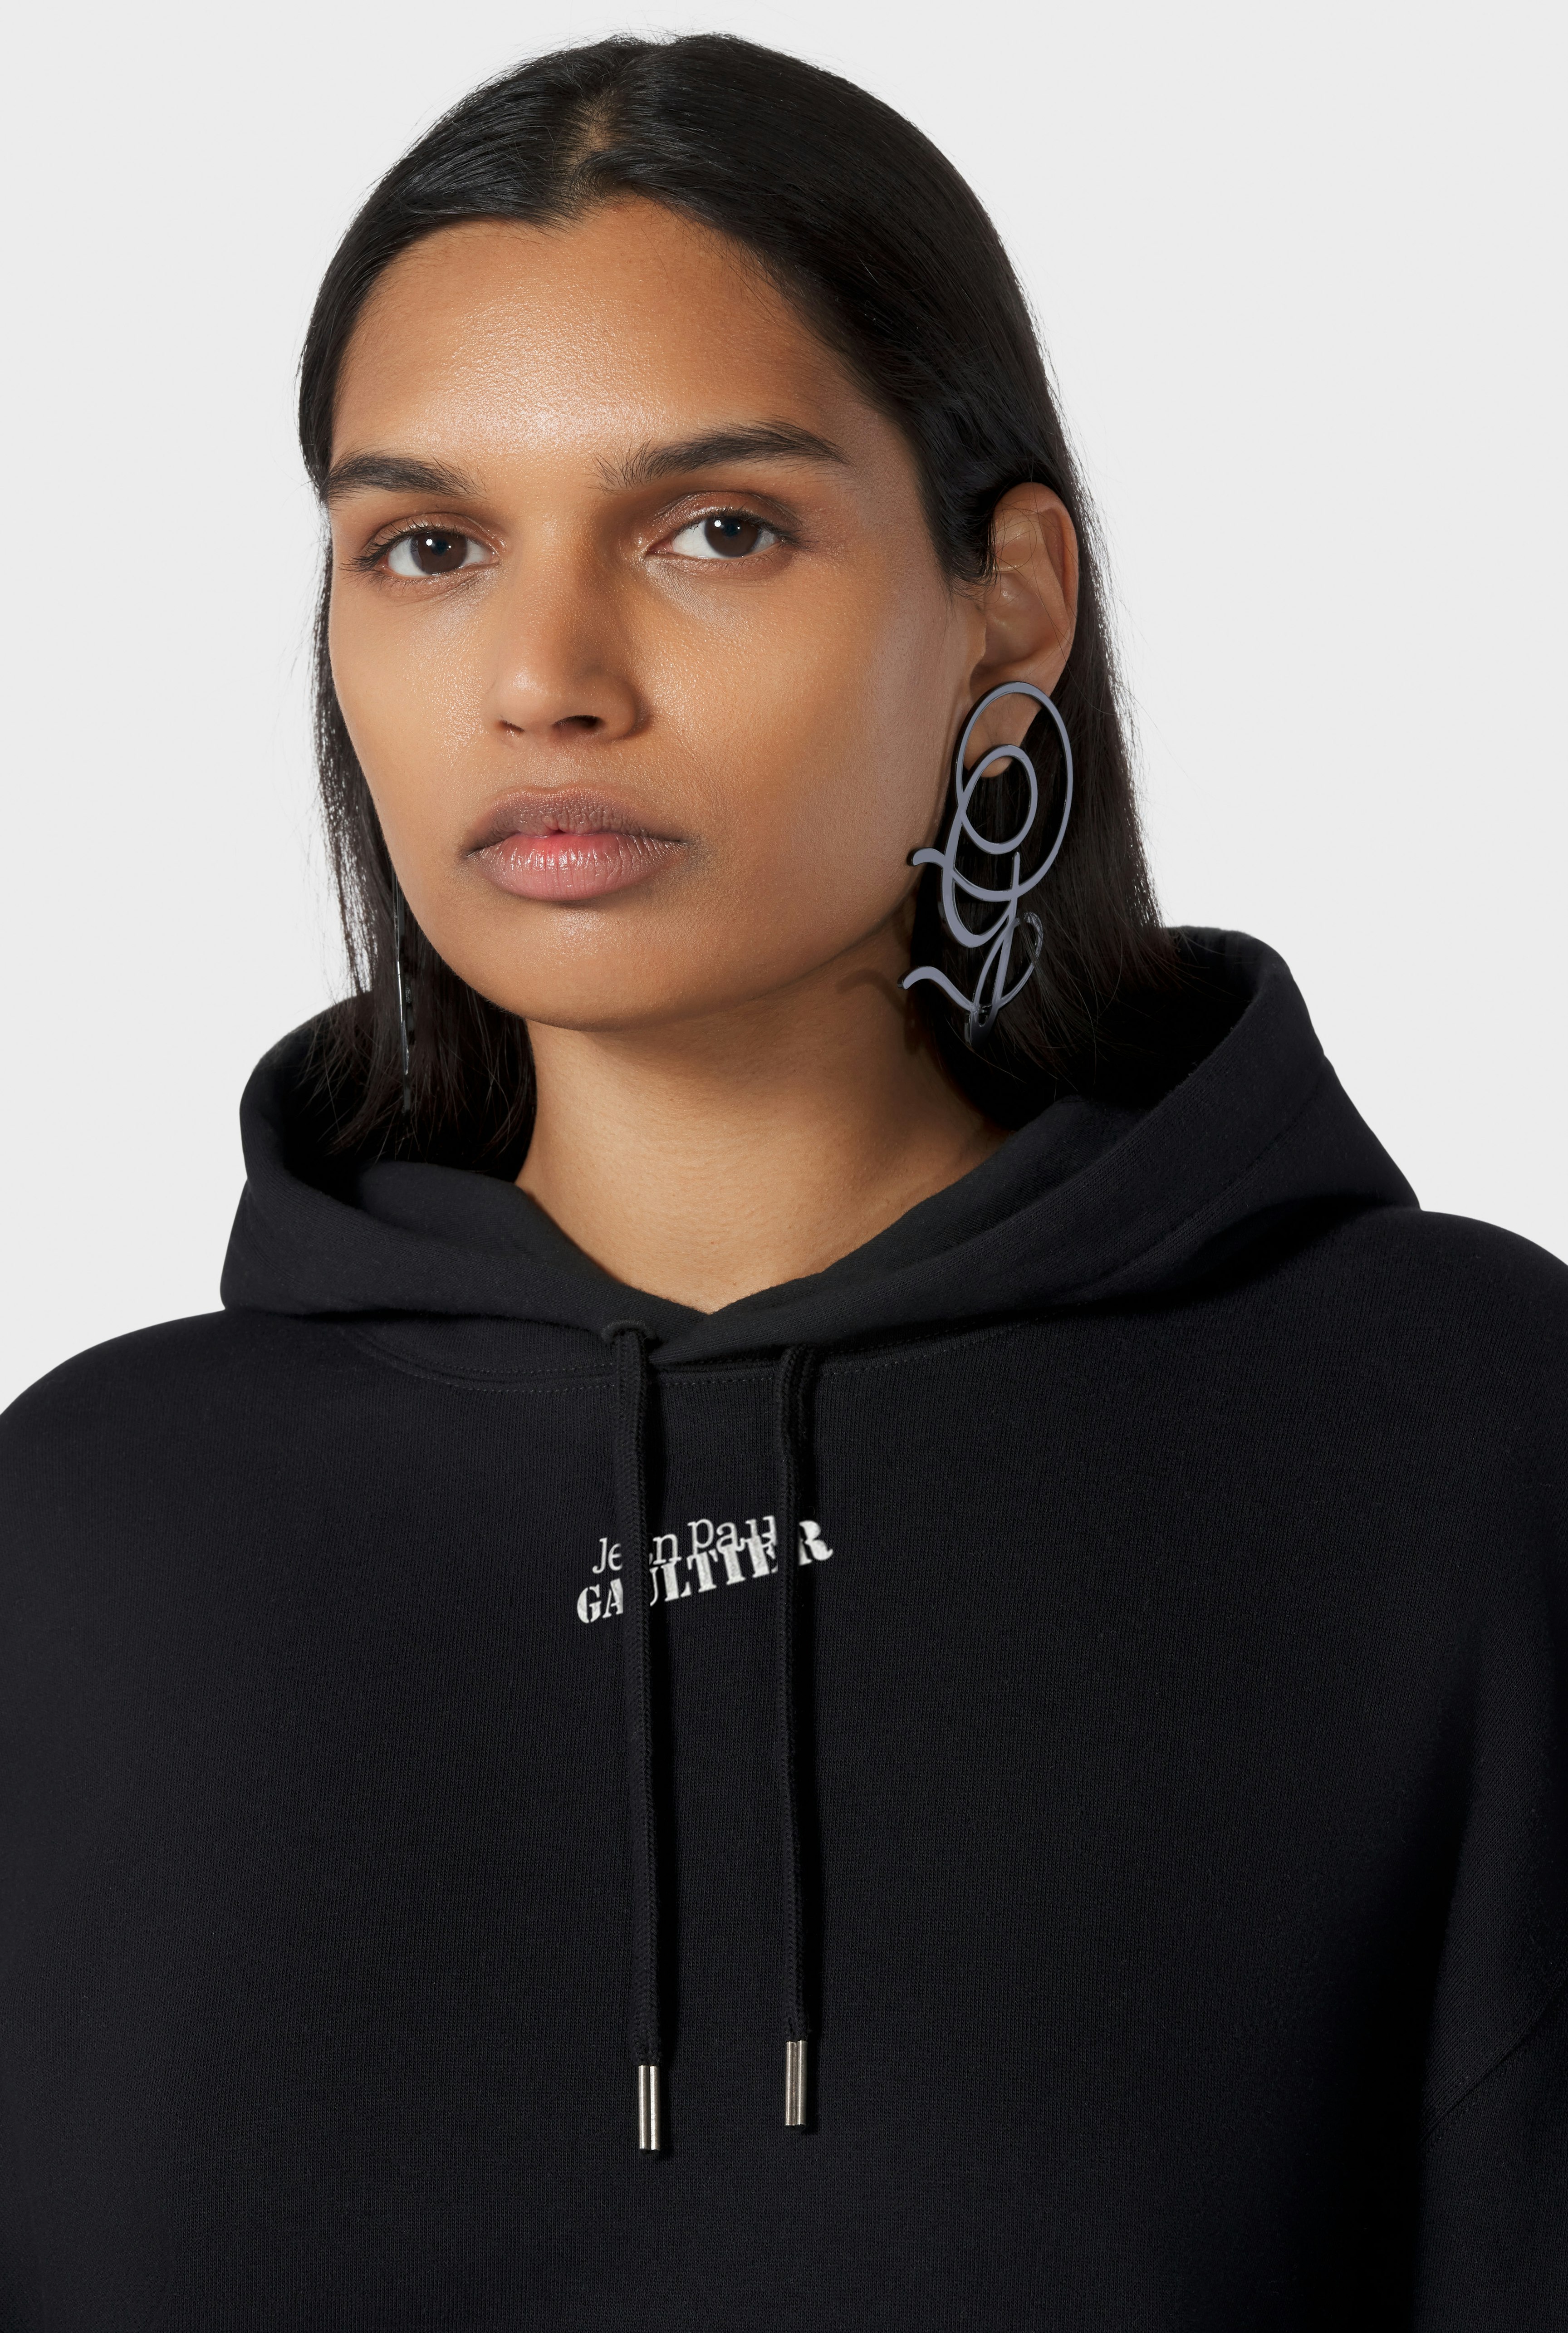 The Black Lace-Up Hooded JPG Sweatshirt